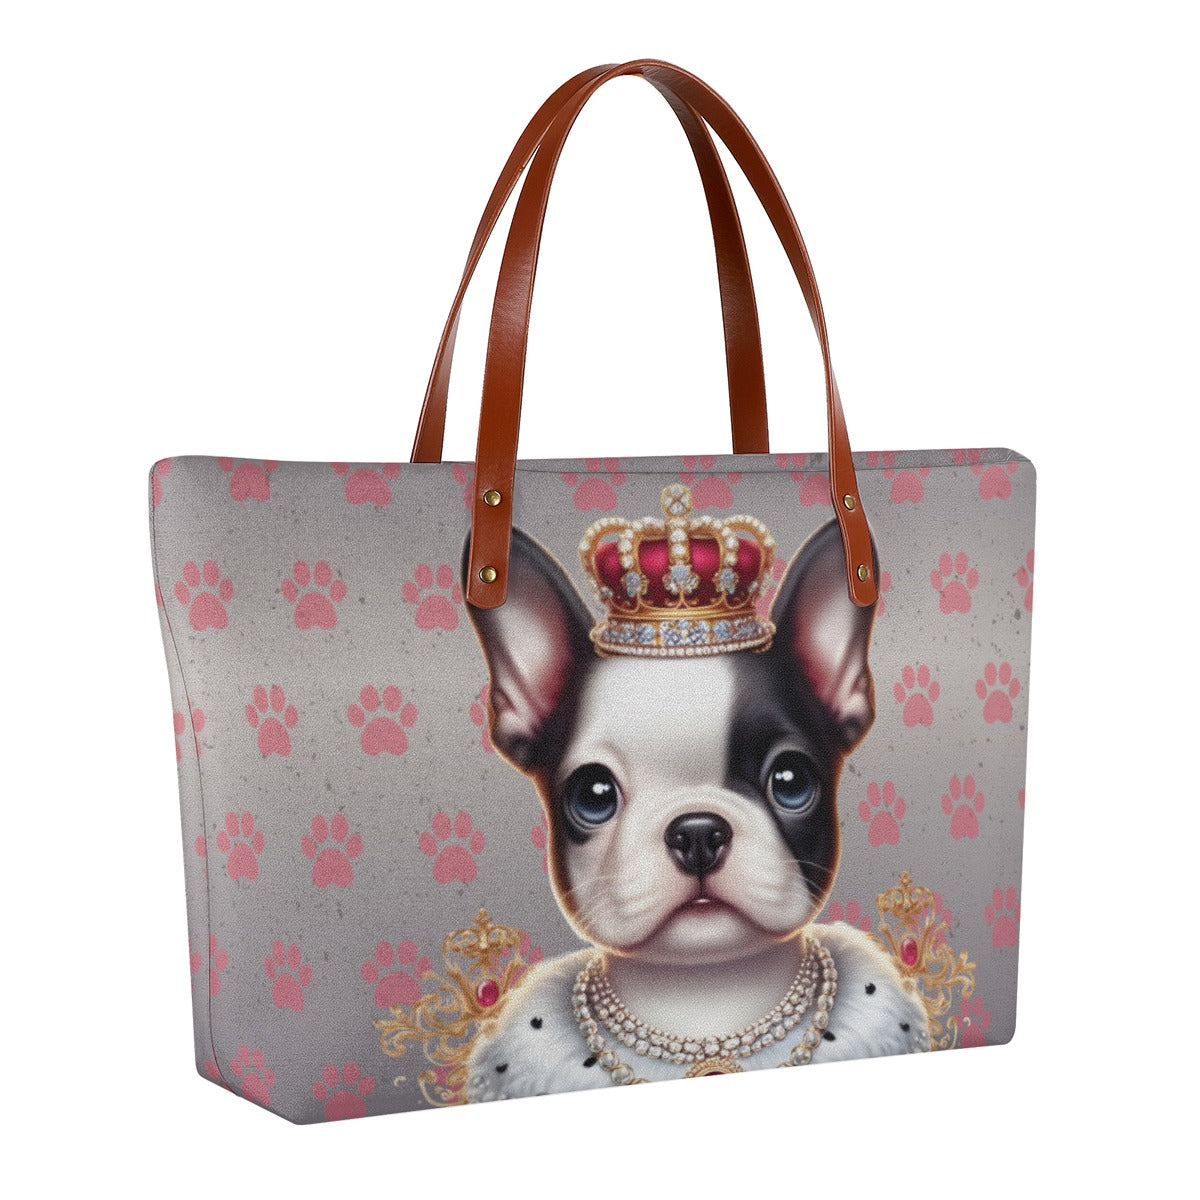 Bailey - Women's Tote Bag for Boston Terrier lovers